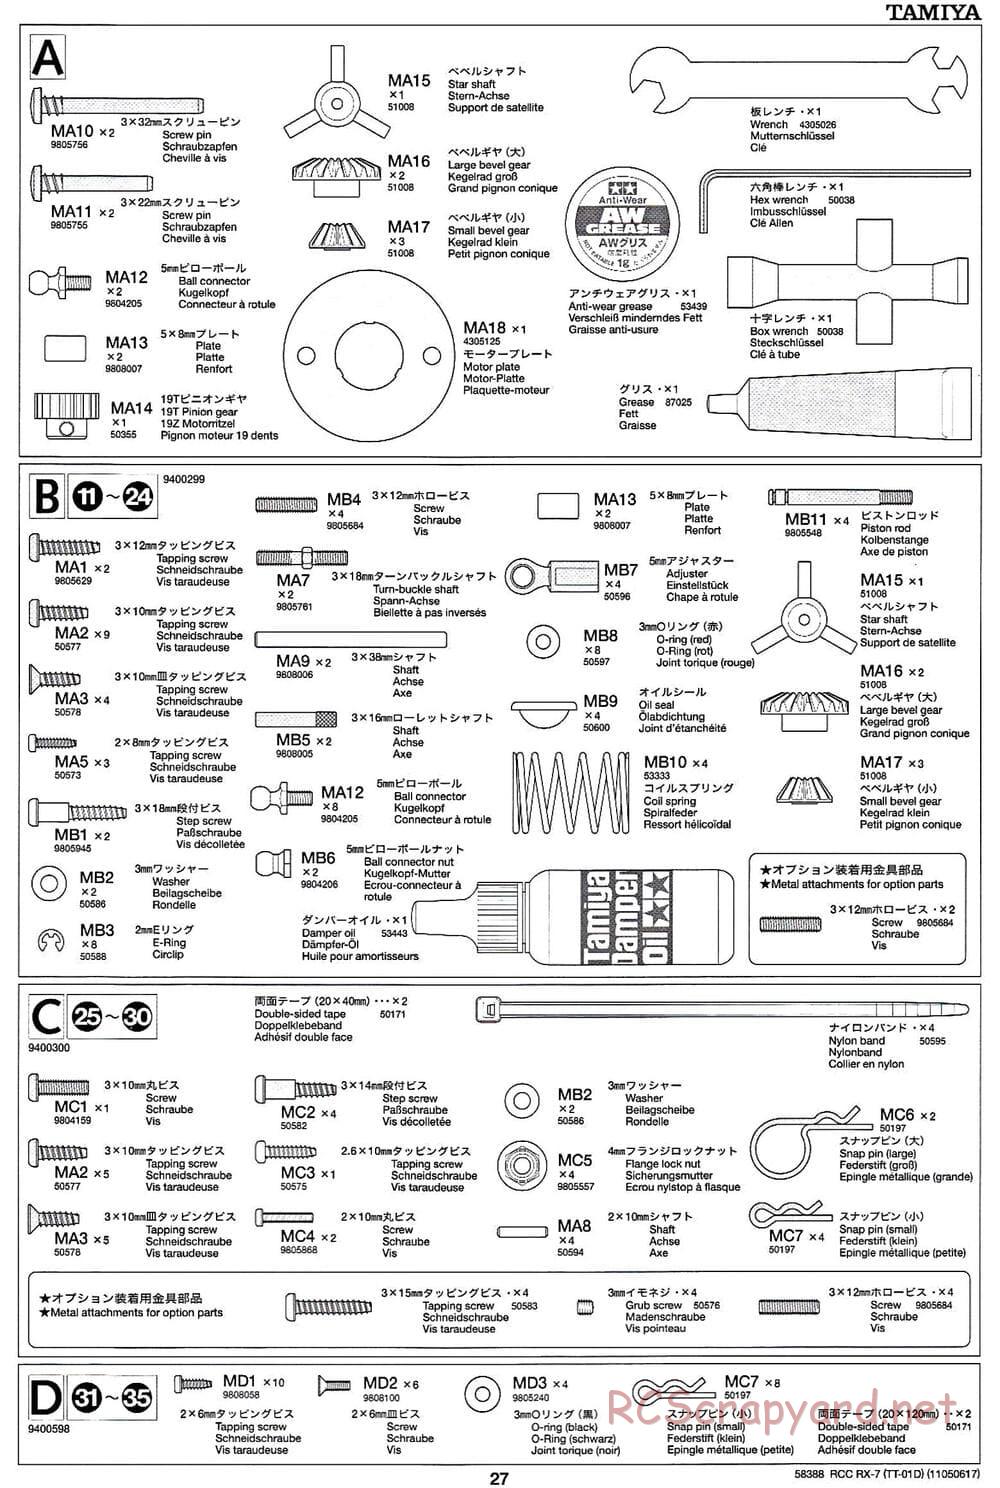 Tamiya - Mazda RX-7 - Drift Spec - TT-01D Chassis - Manual - Page 27